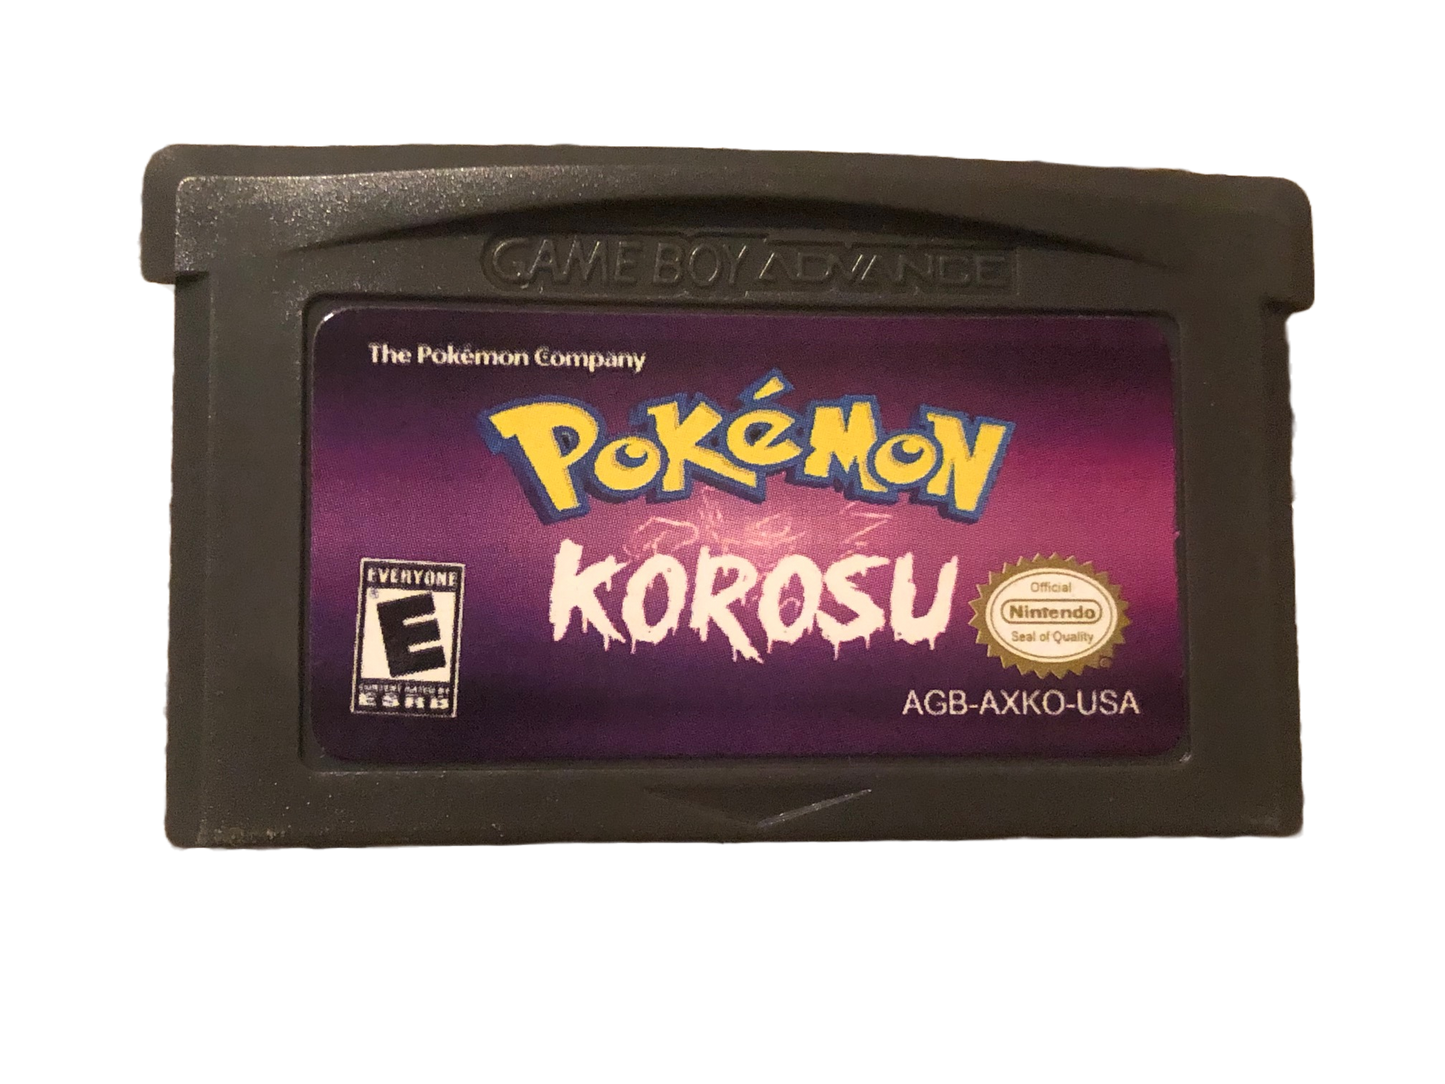 Pokemon Korosu Nintendo Game Boy Advance GBA Video Game